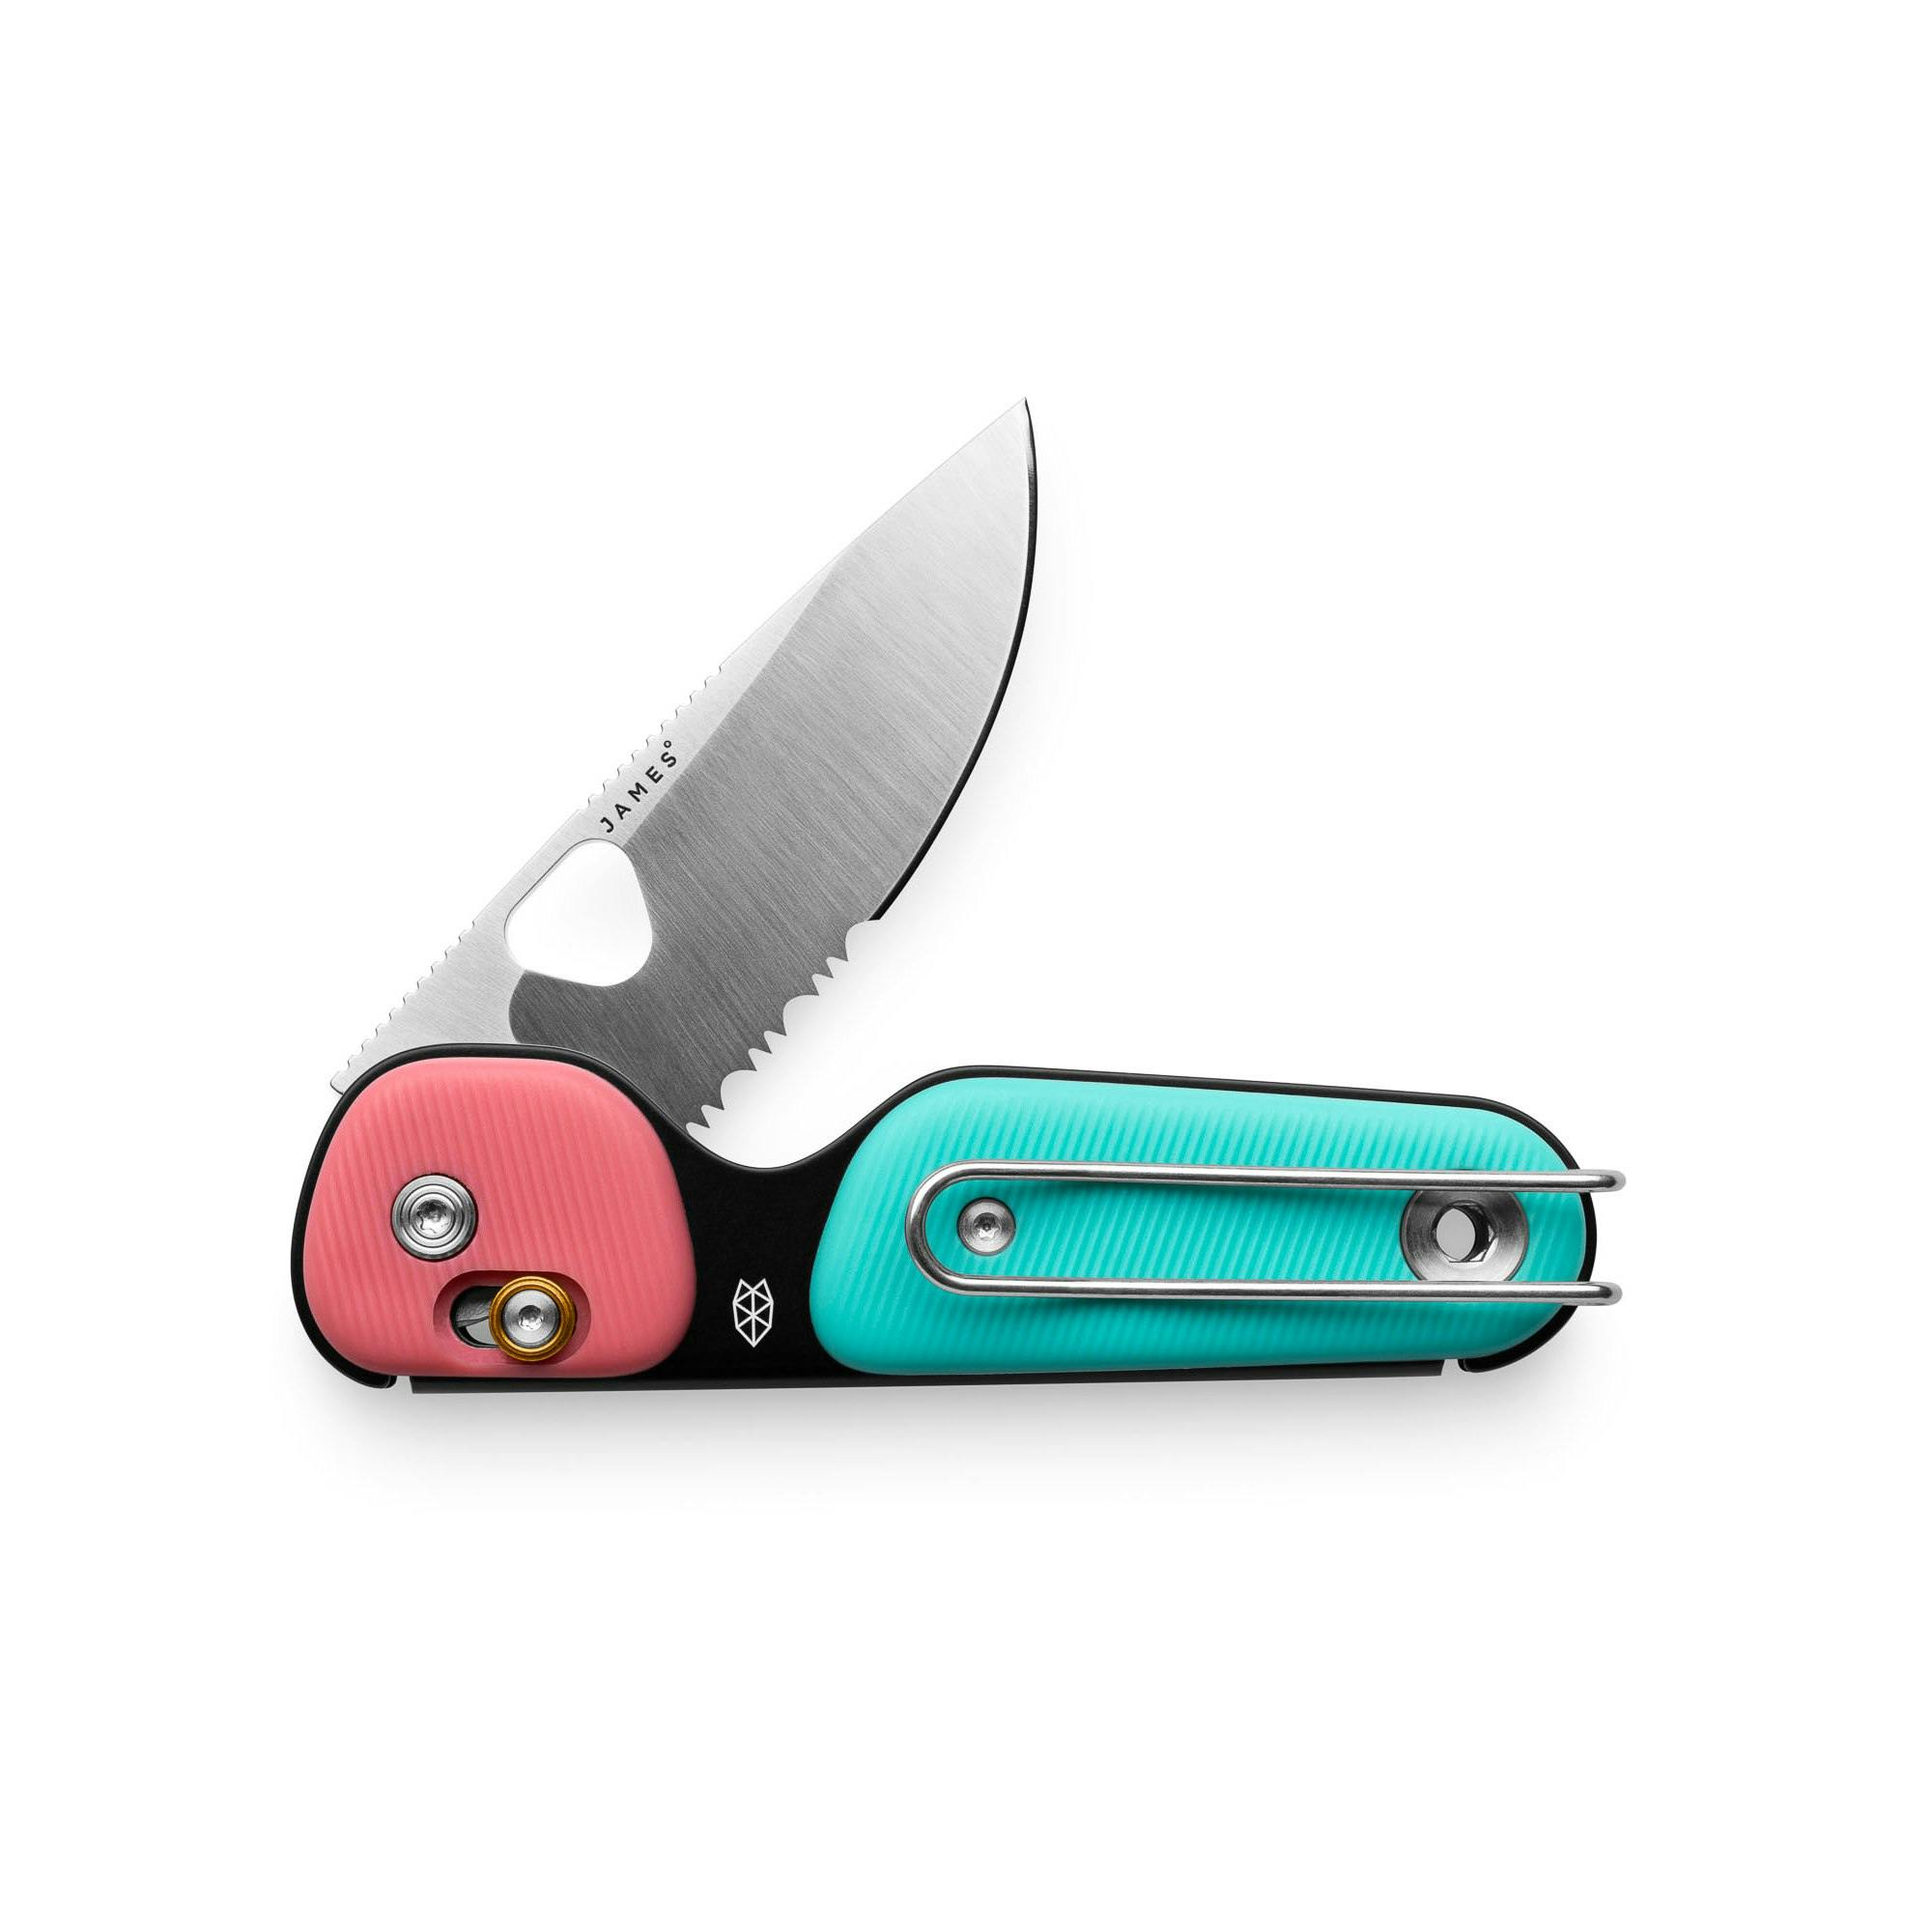 The Redstone Pocket Knife